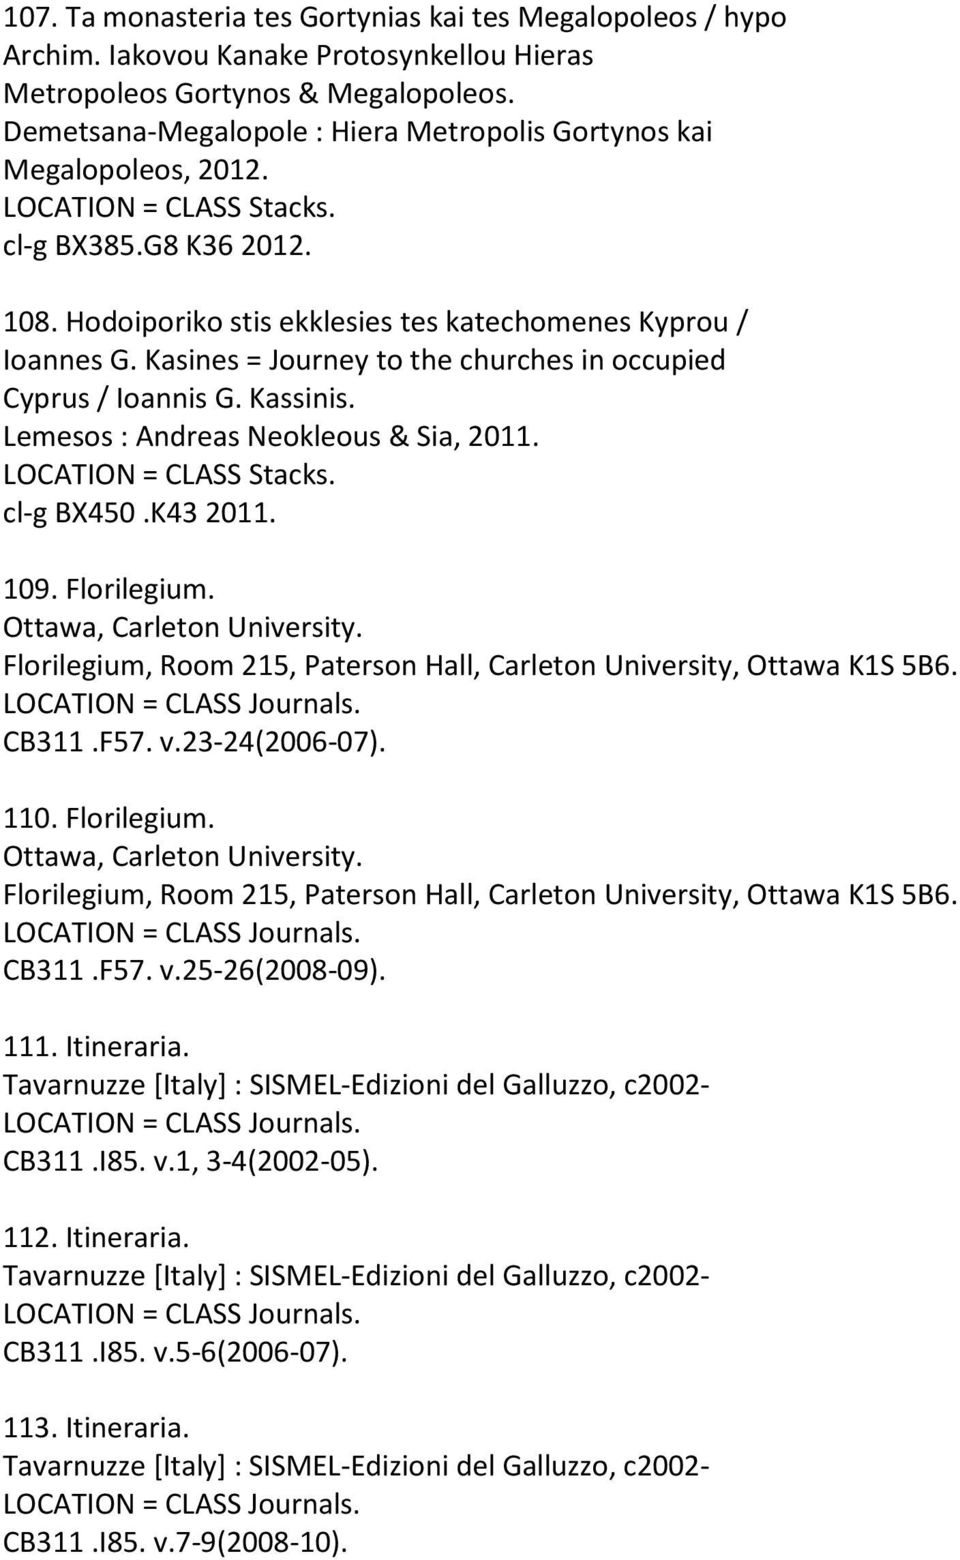 Kasines = Journey to the churches in occupied Cyprus / Ioannis G. Kassinis. Lemesos : Andreas Neokleous & Sia, 2011. cl-g BX450.K43 2011. 109. Florilegium. Ottawa, Carleton University.